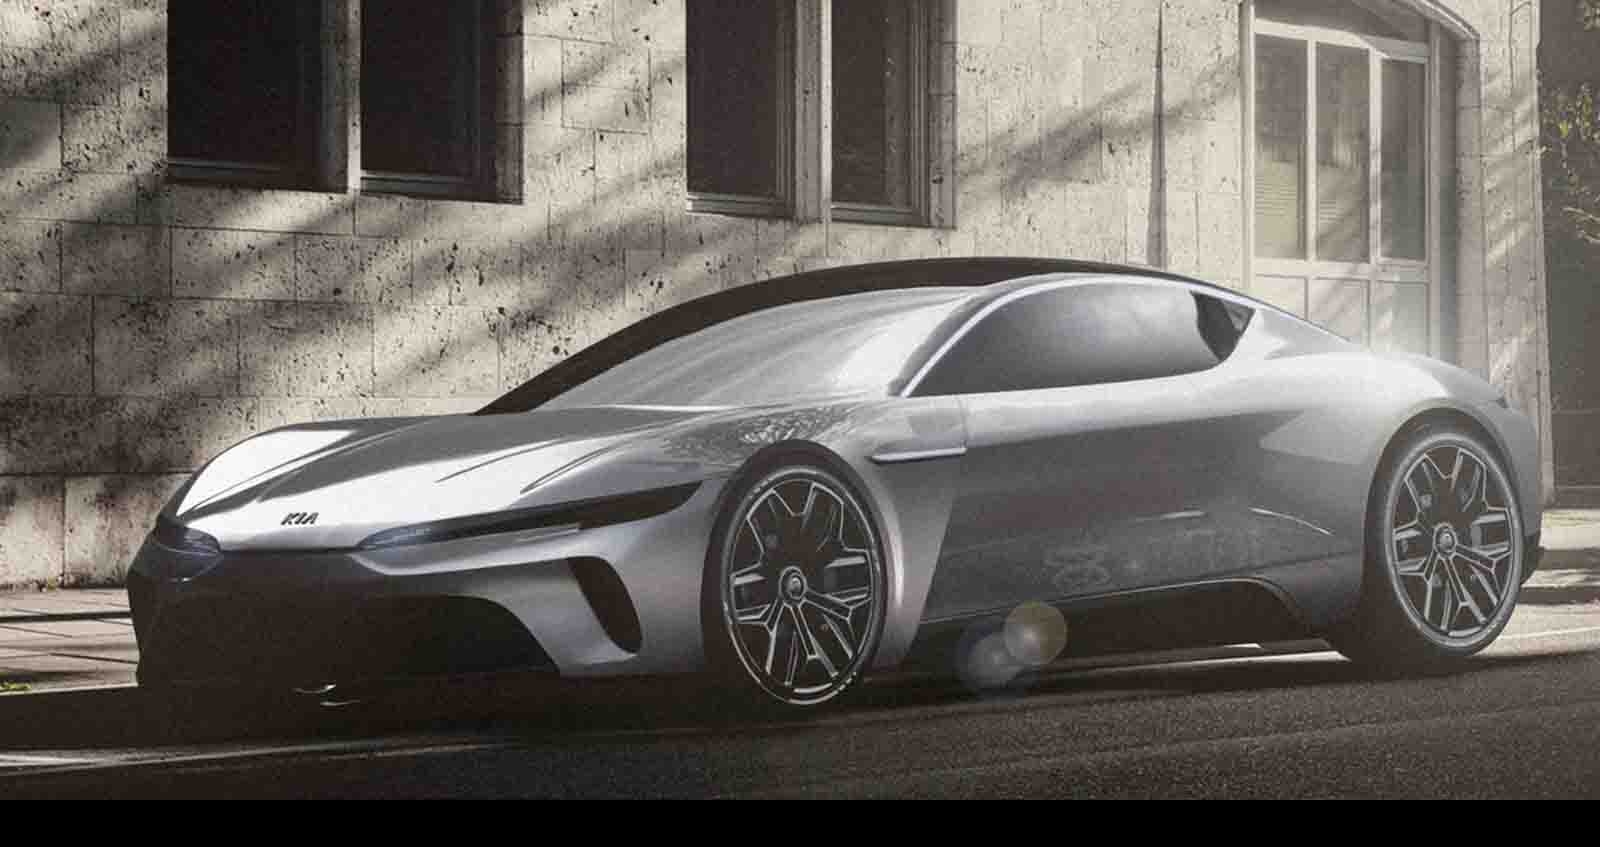 KIA มีโอกาศผลิต Super Car EV ร่วมกับ Rimac-Bugatti